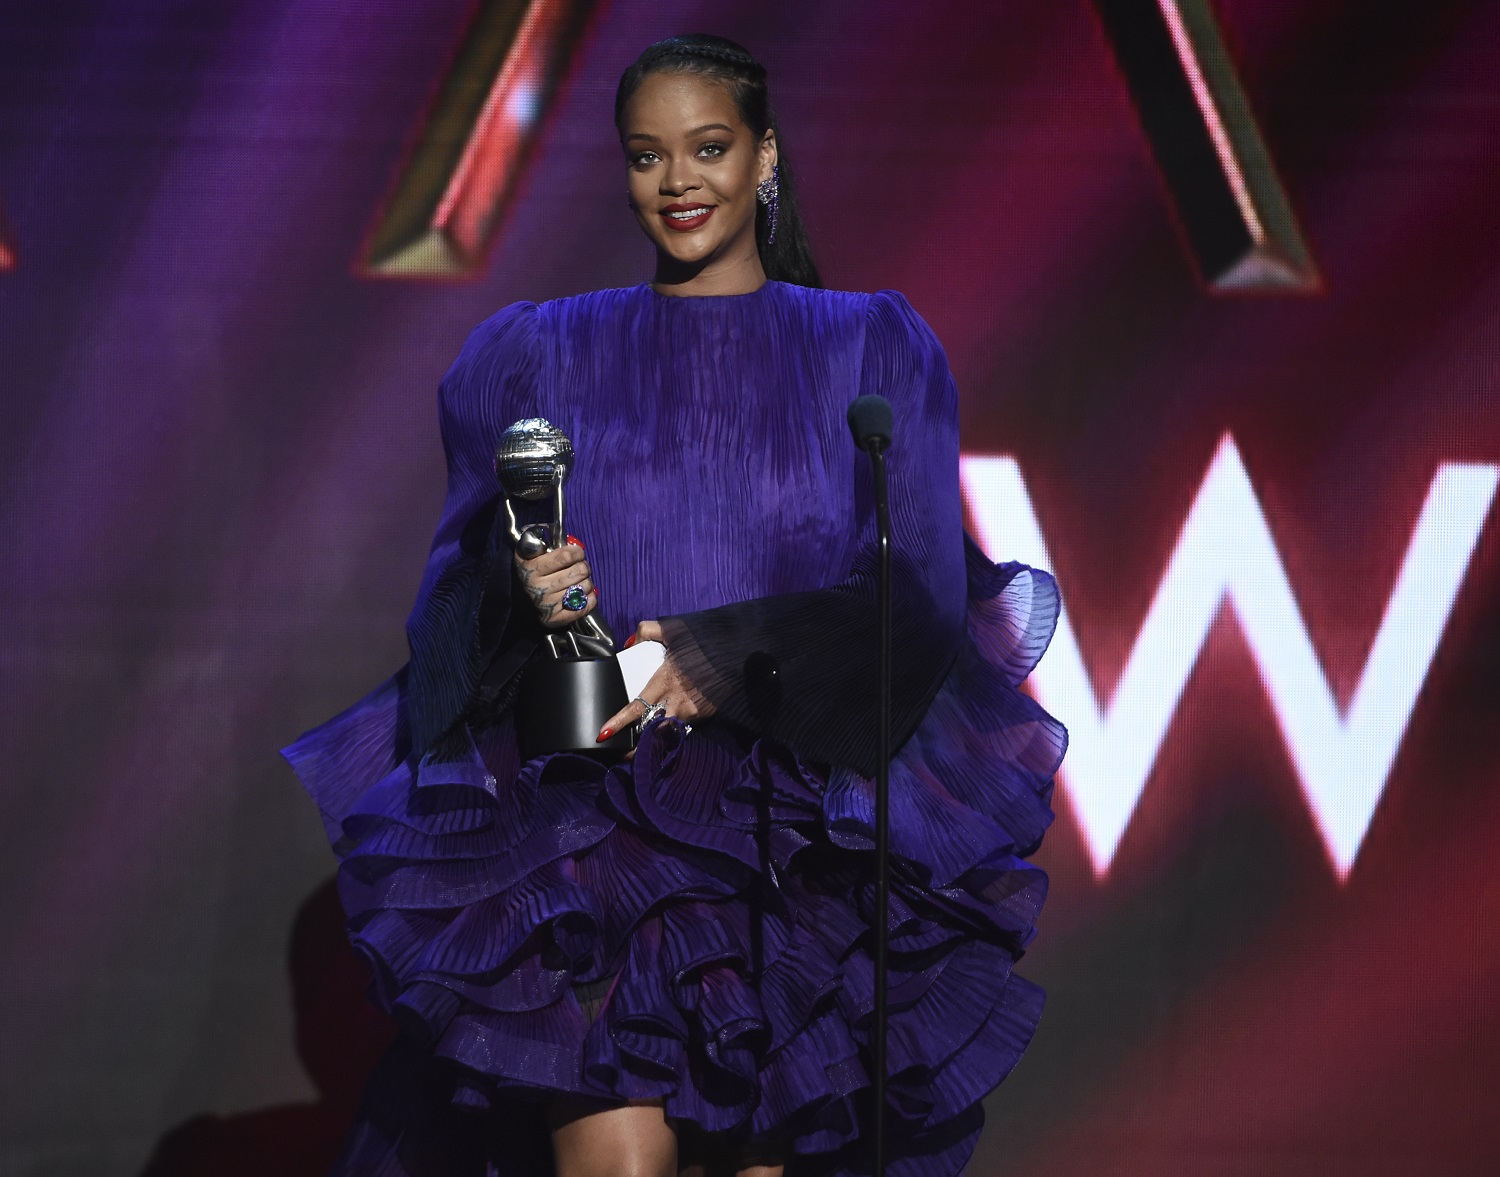 Rihanna's Fenty Fashion Label UK: Every Single Look